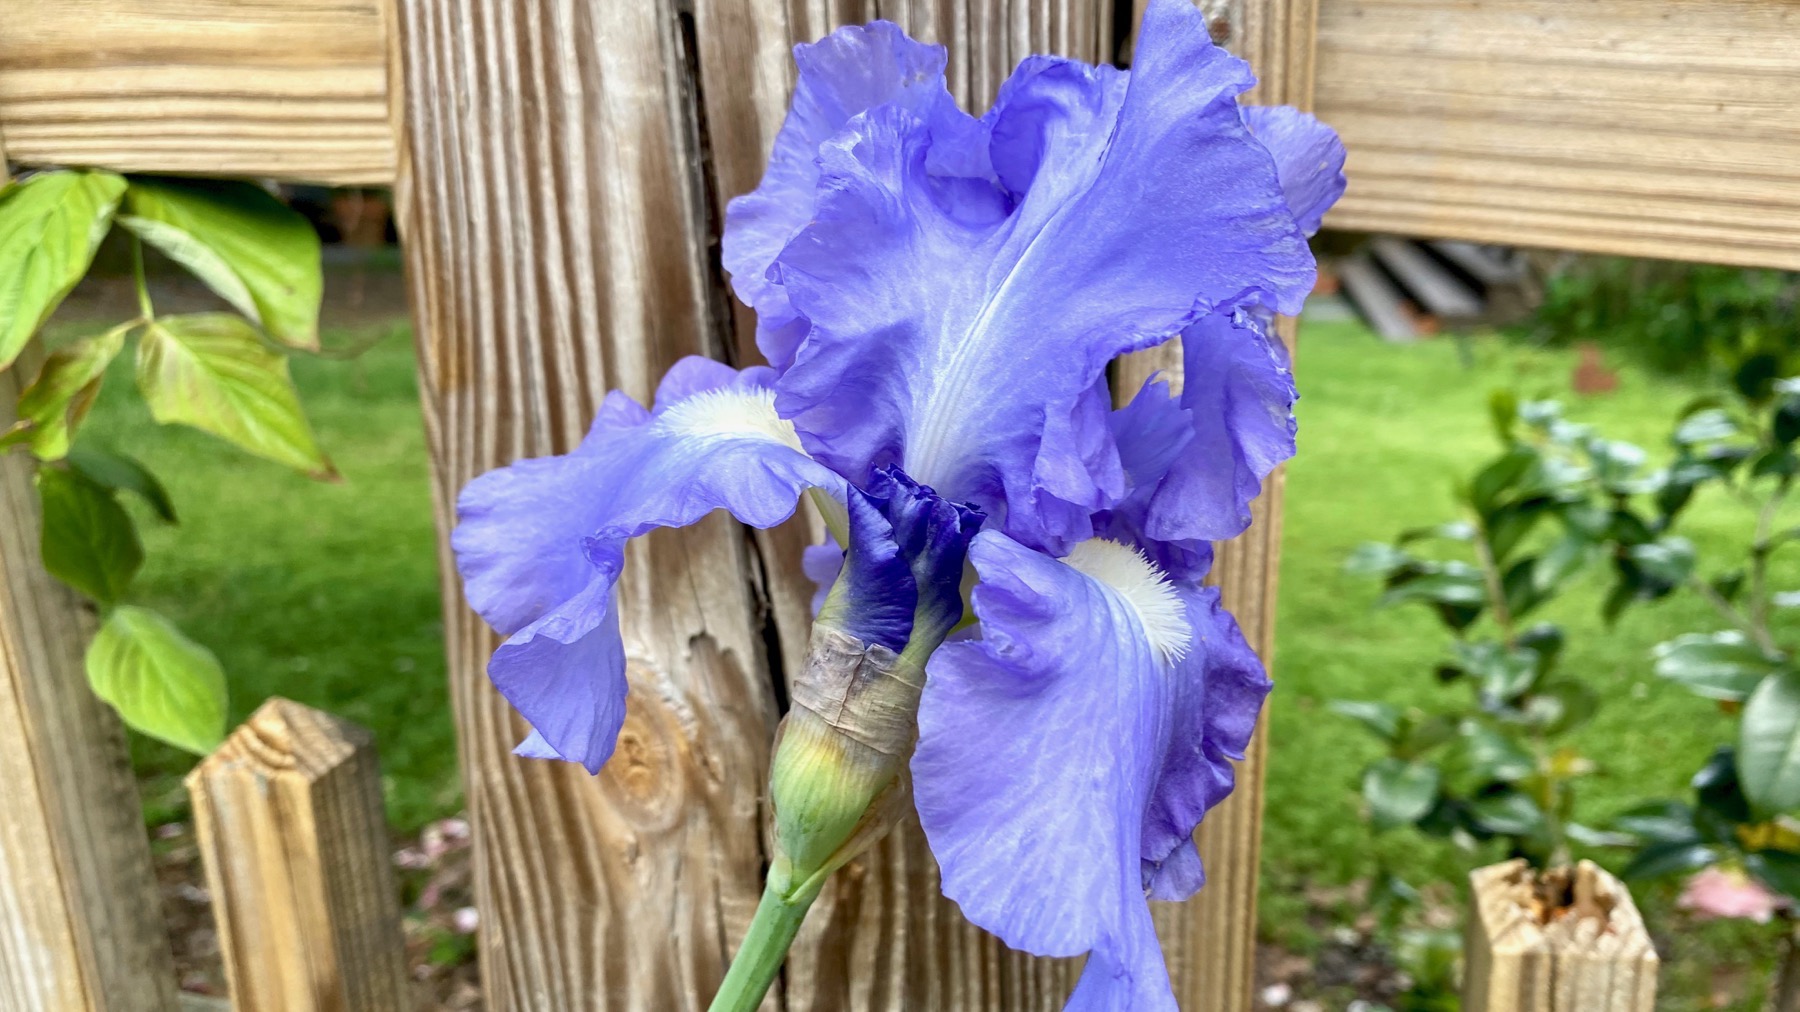 Iris fence